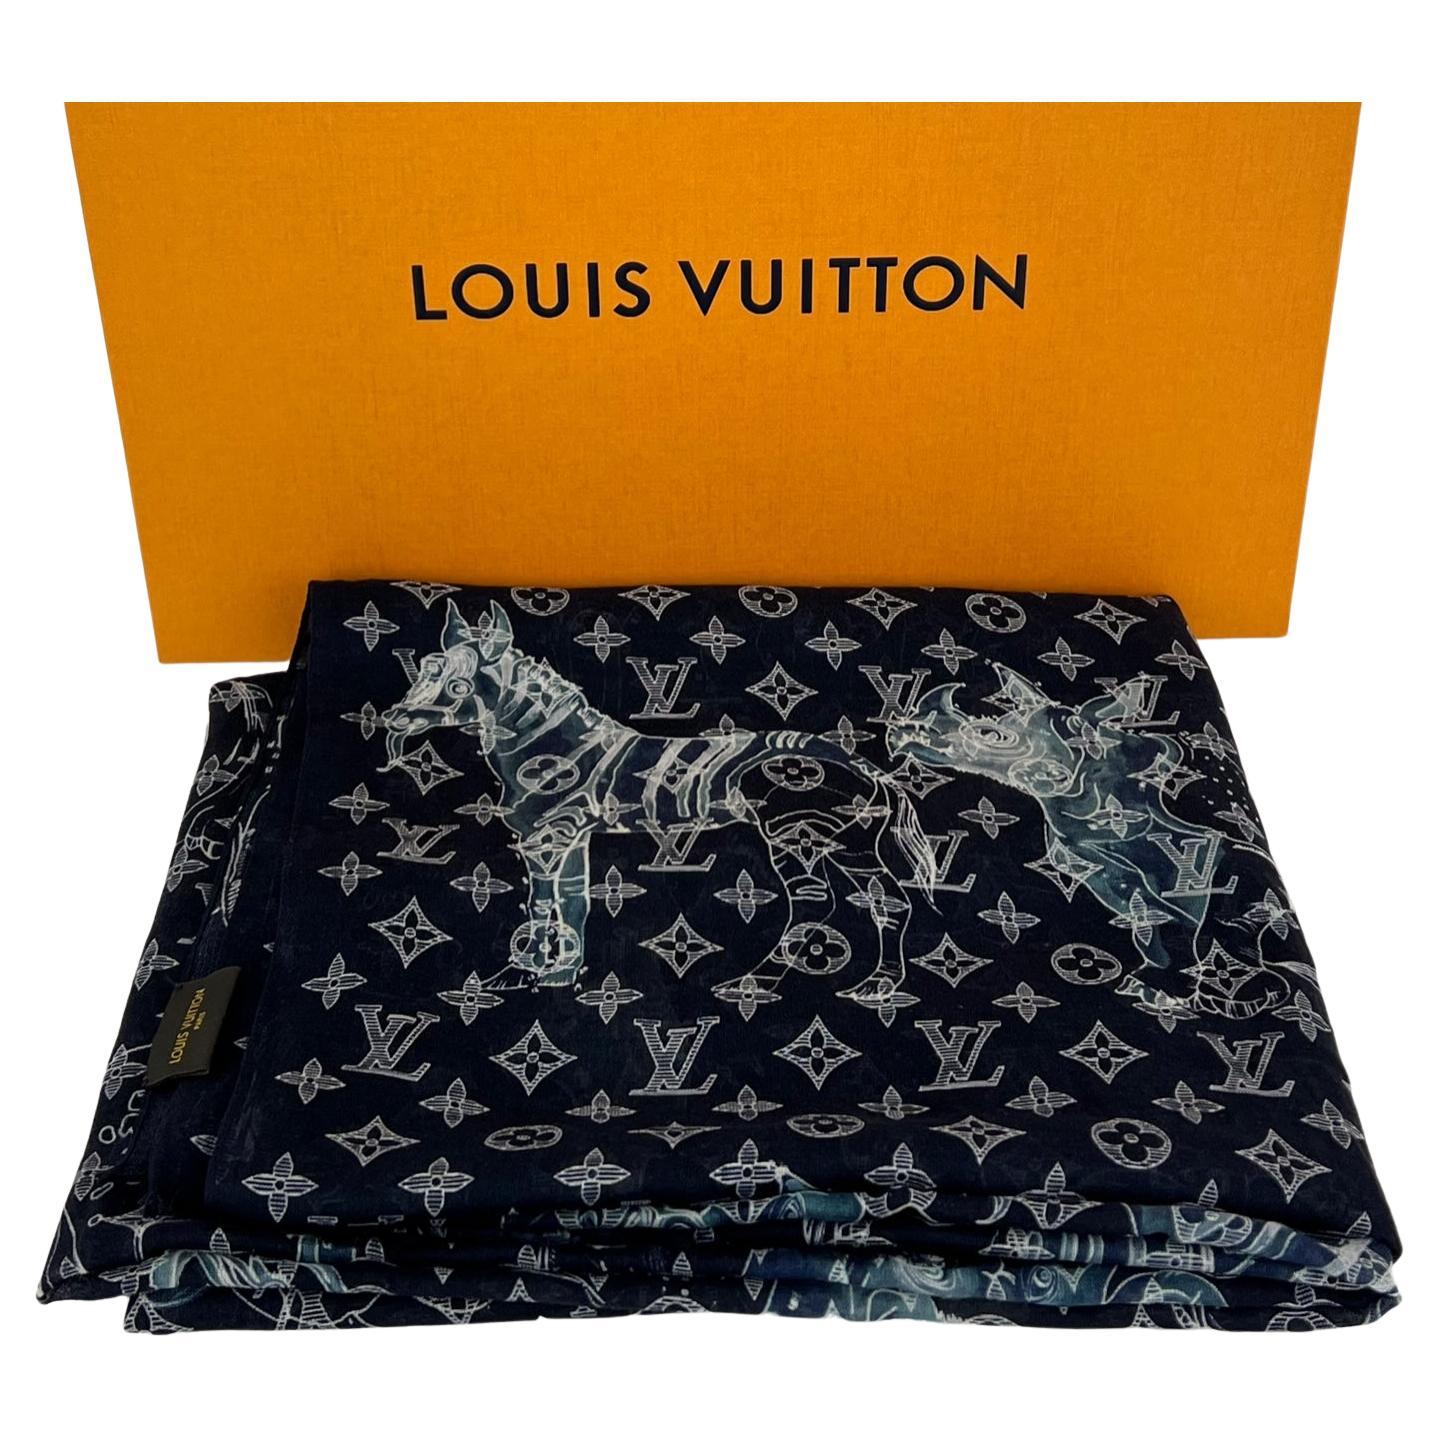 Sold at Auction: Louis Brown, Louis Vuitton - Scarf - Cashmere